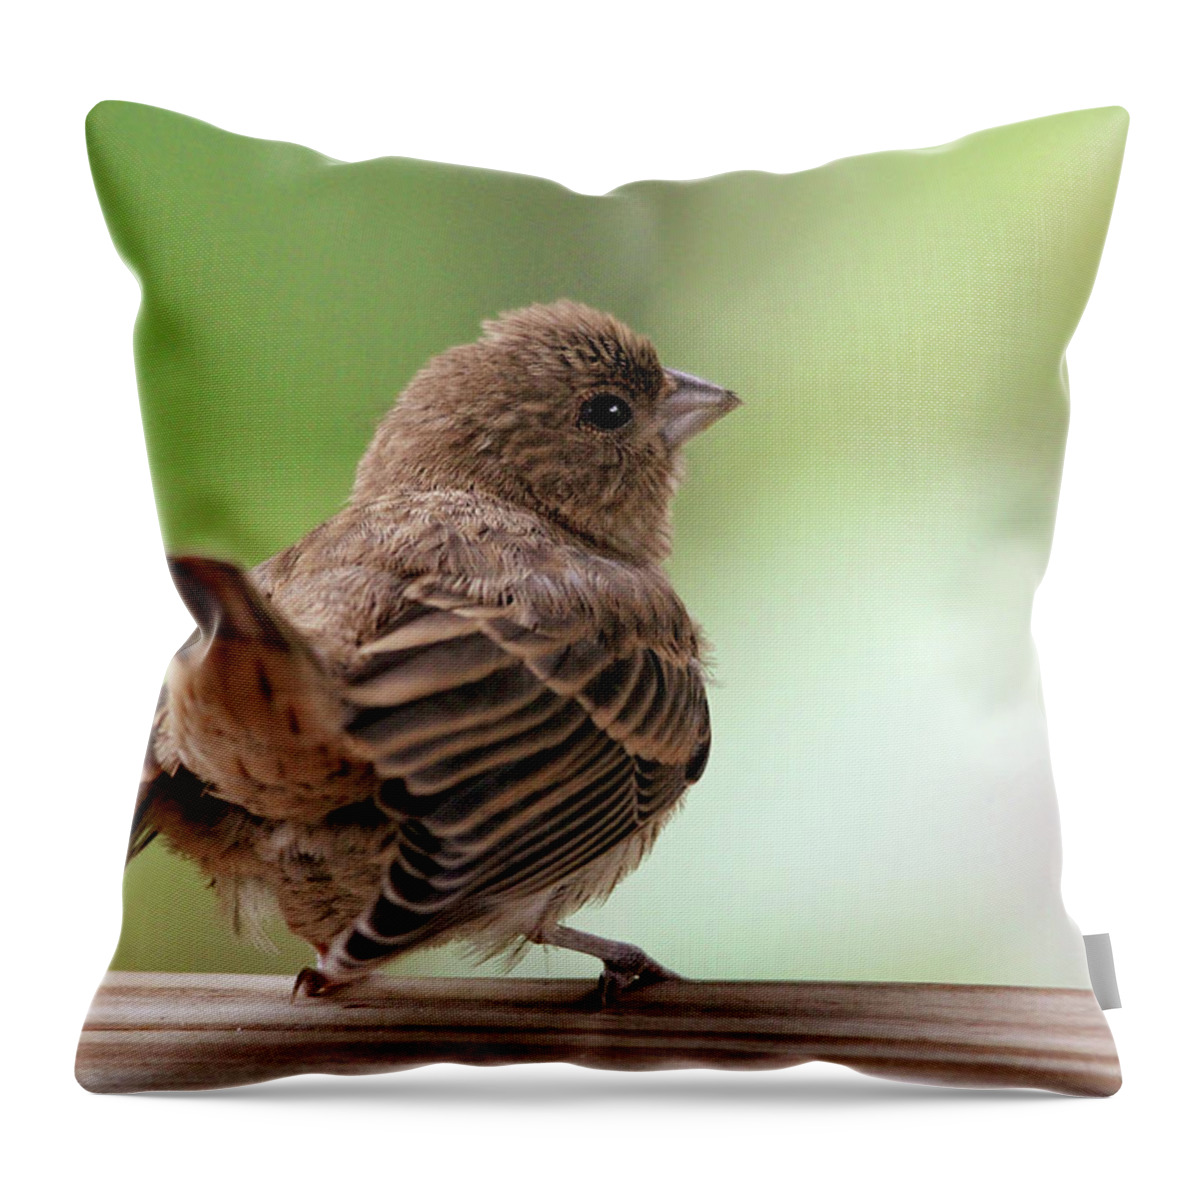 Birds Throw Pillow featuring the photograph Little Bird by Trina Ansel